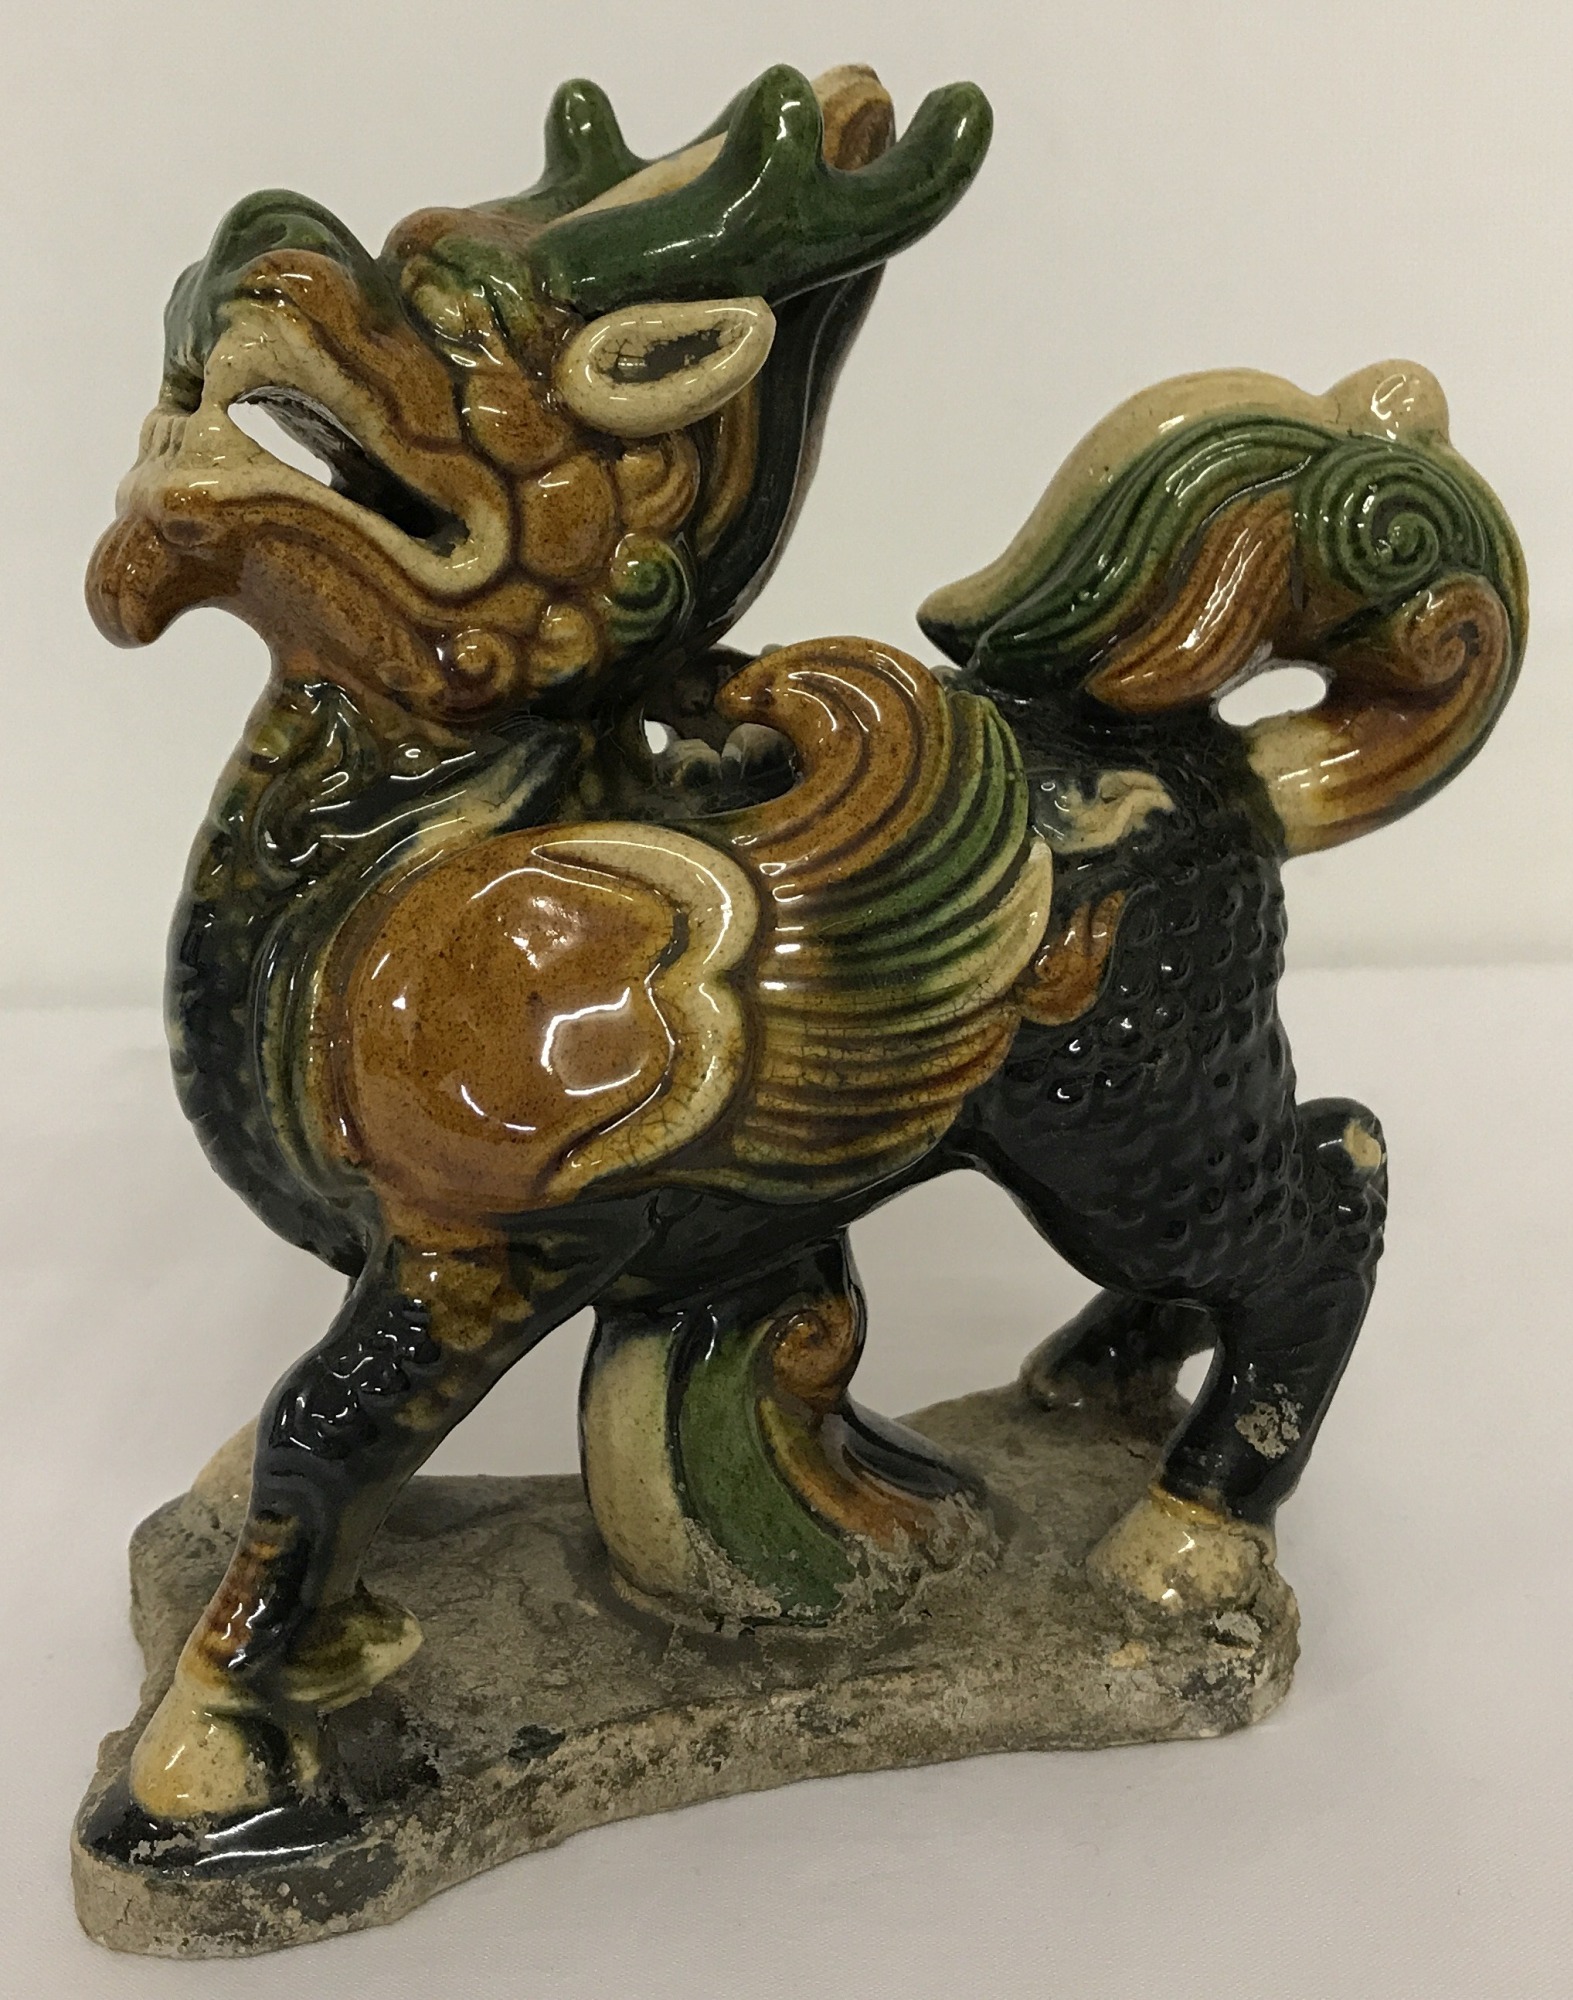 A Chinese porcelain figurine of a Foo Dog, with majolica style glaze.